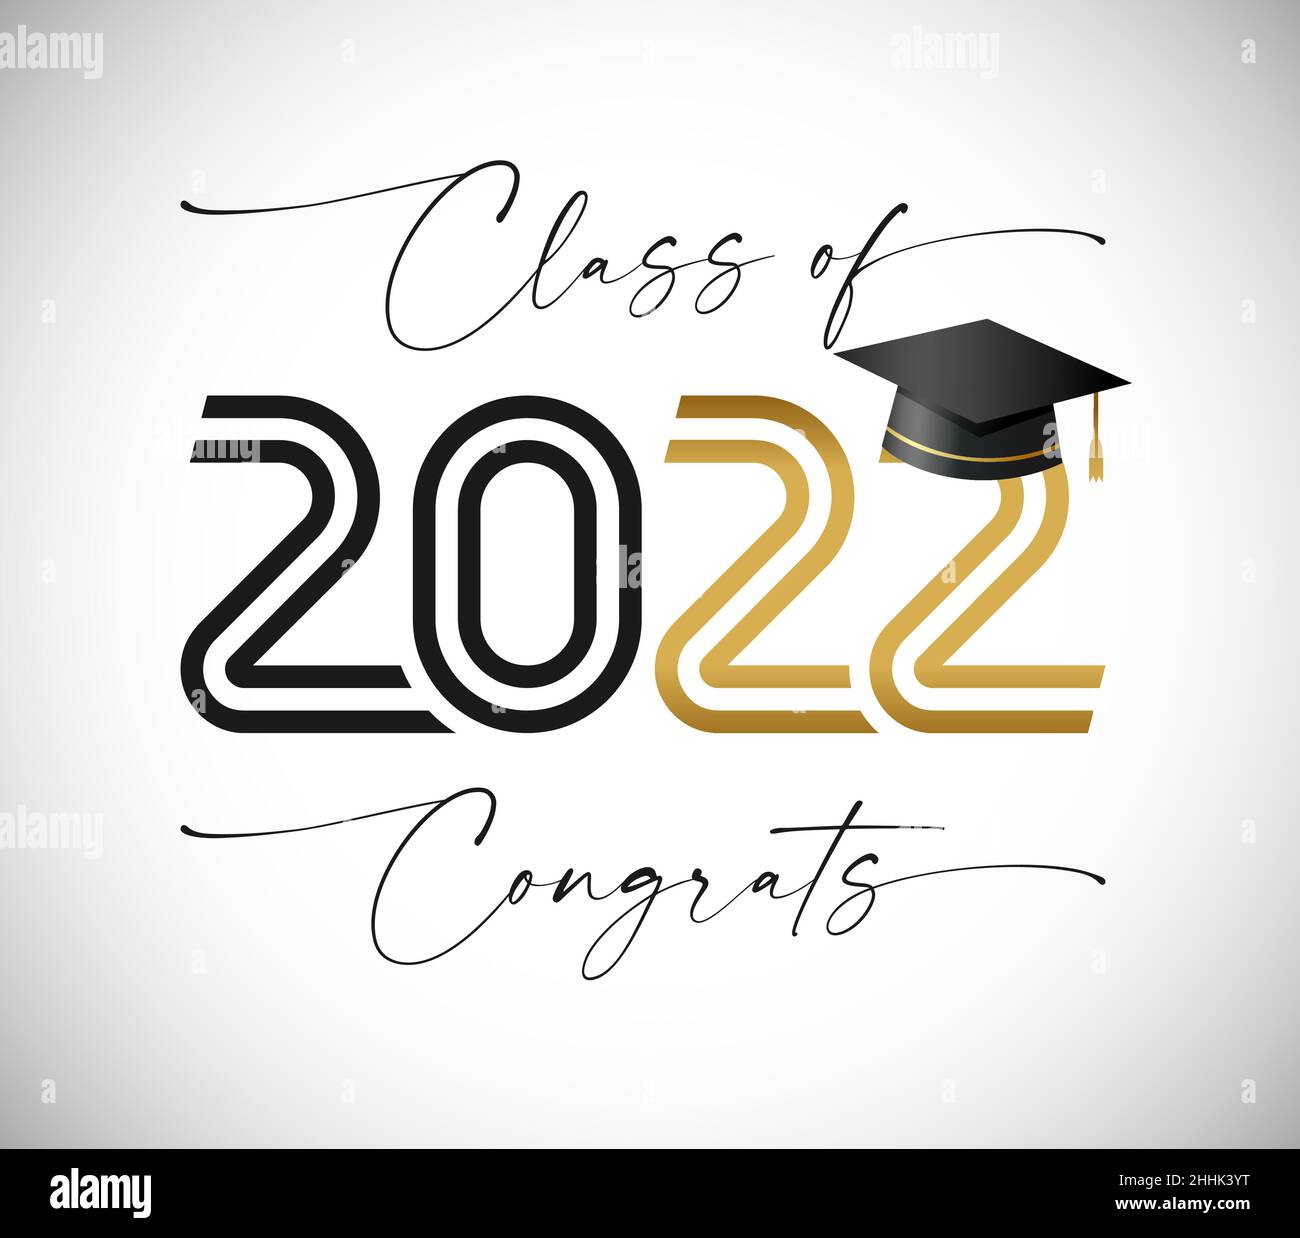 Matc graduation 2022